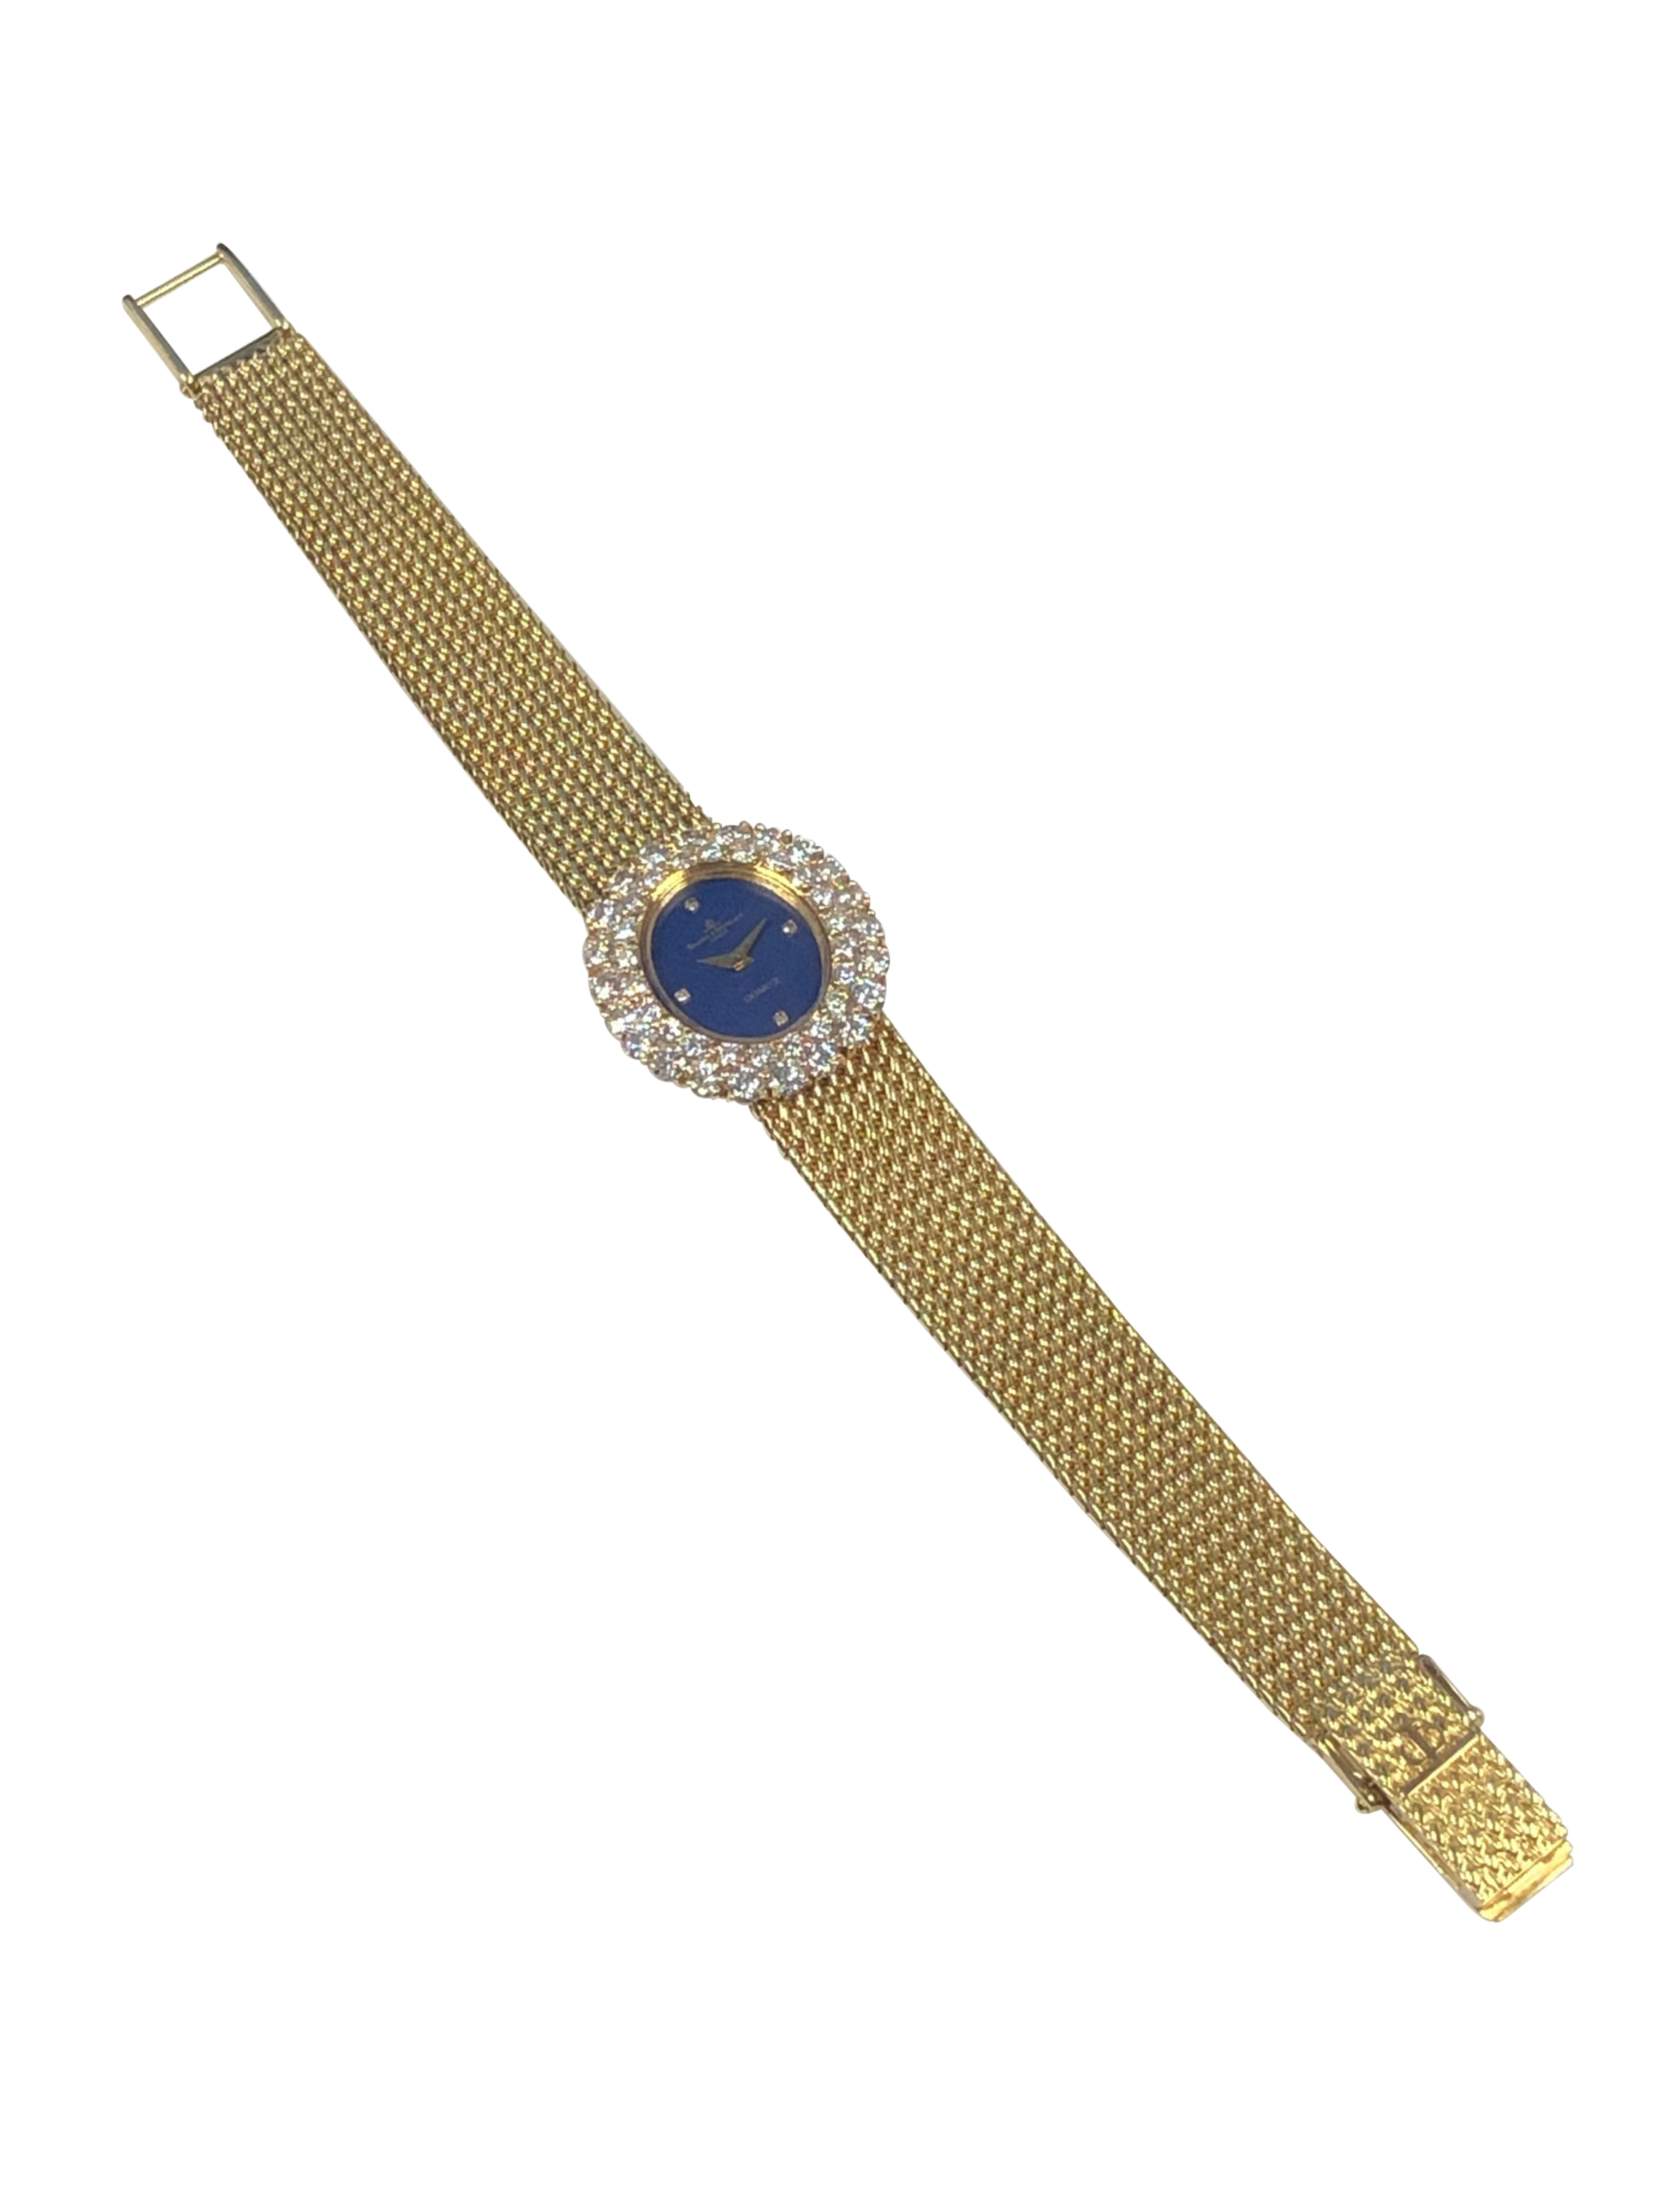 Women's or Men's Baum & Mercier Ladies Yellow Gold Diamonds Quartz Wristwatch